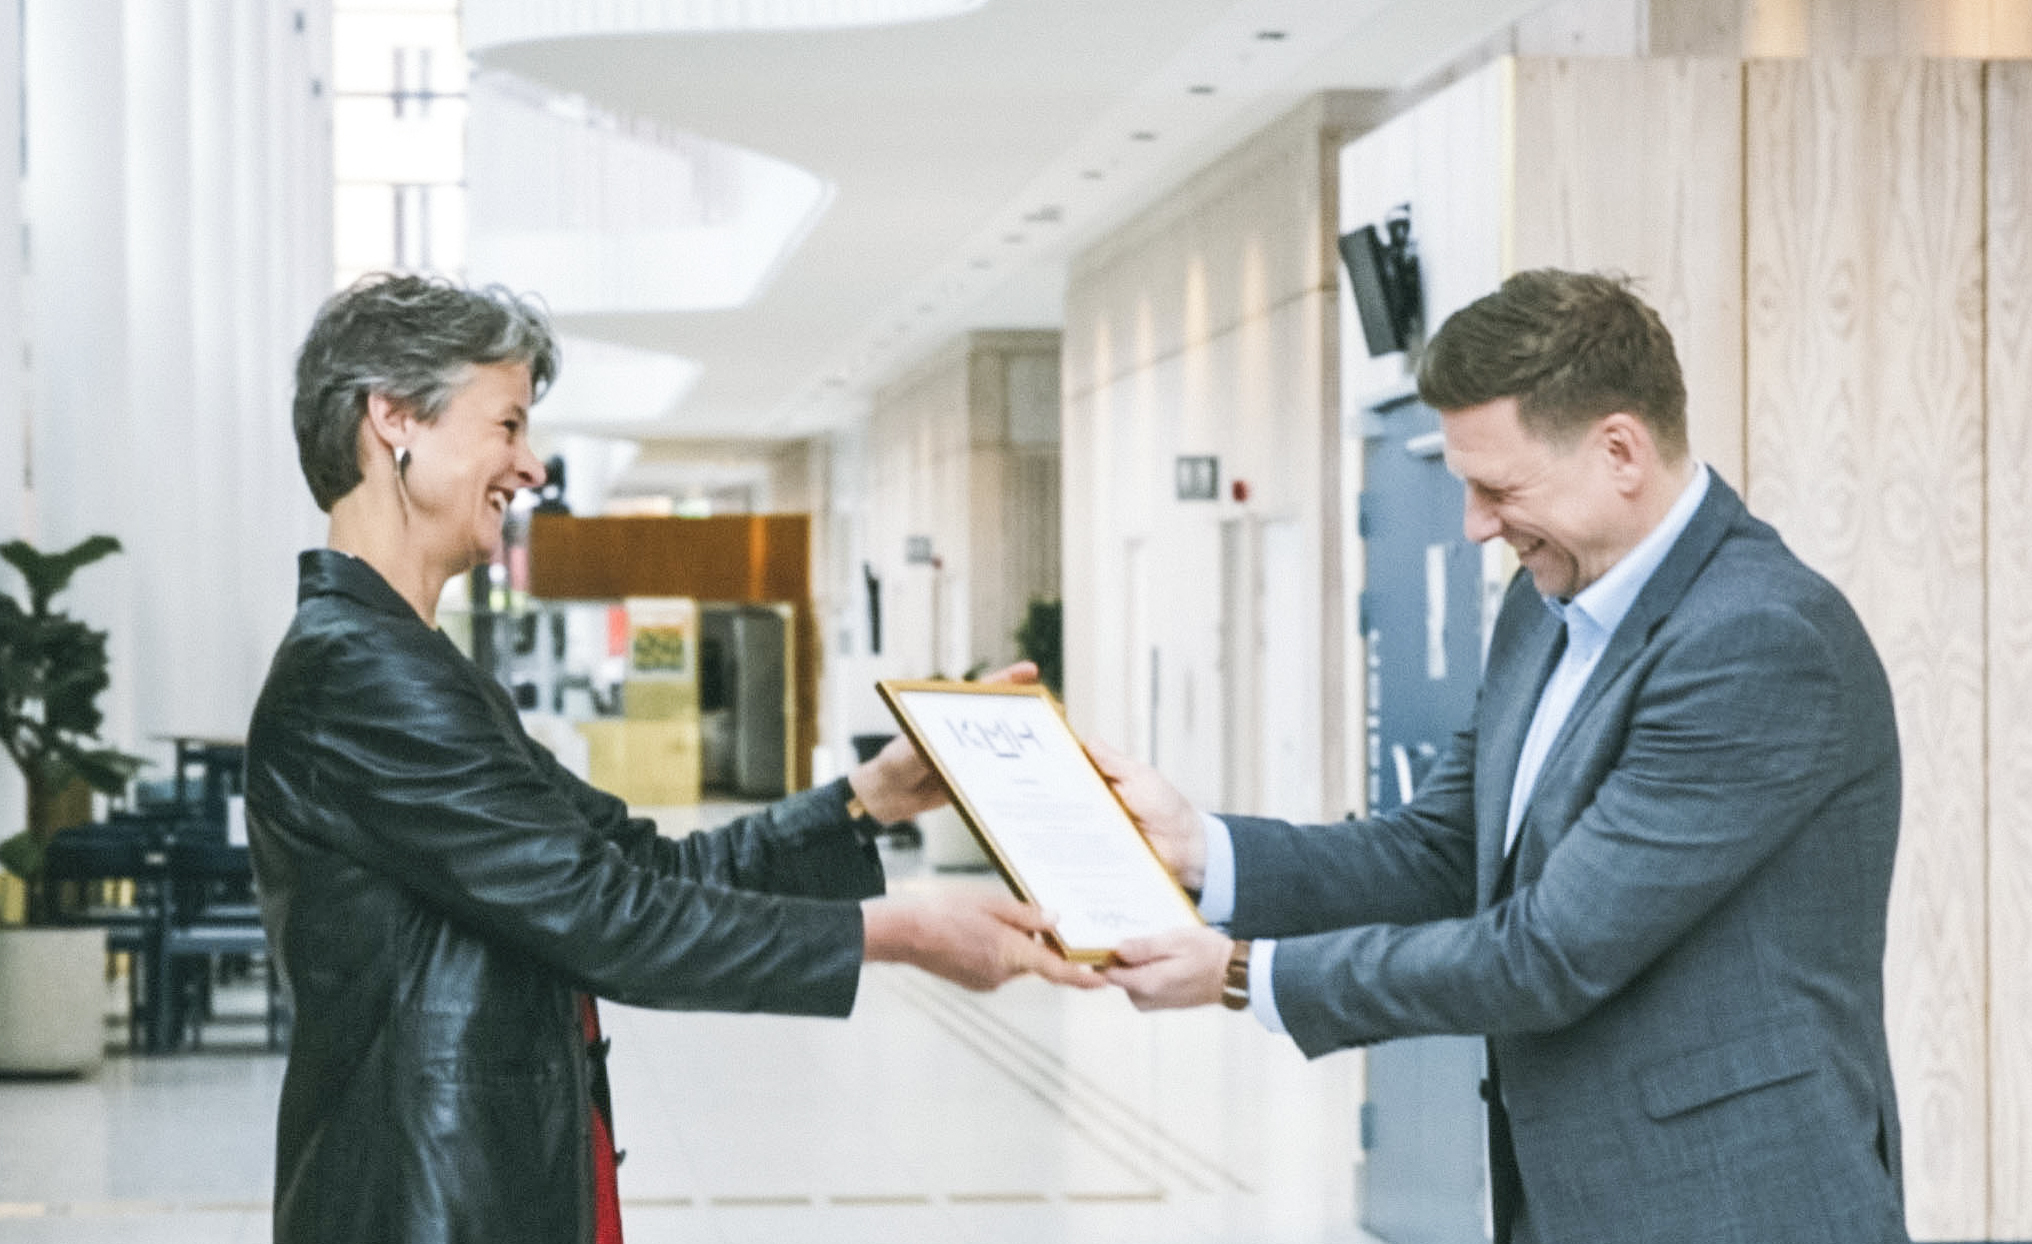 KMH hands over certificate to Kvarnby School